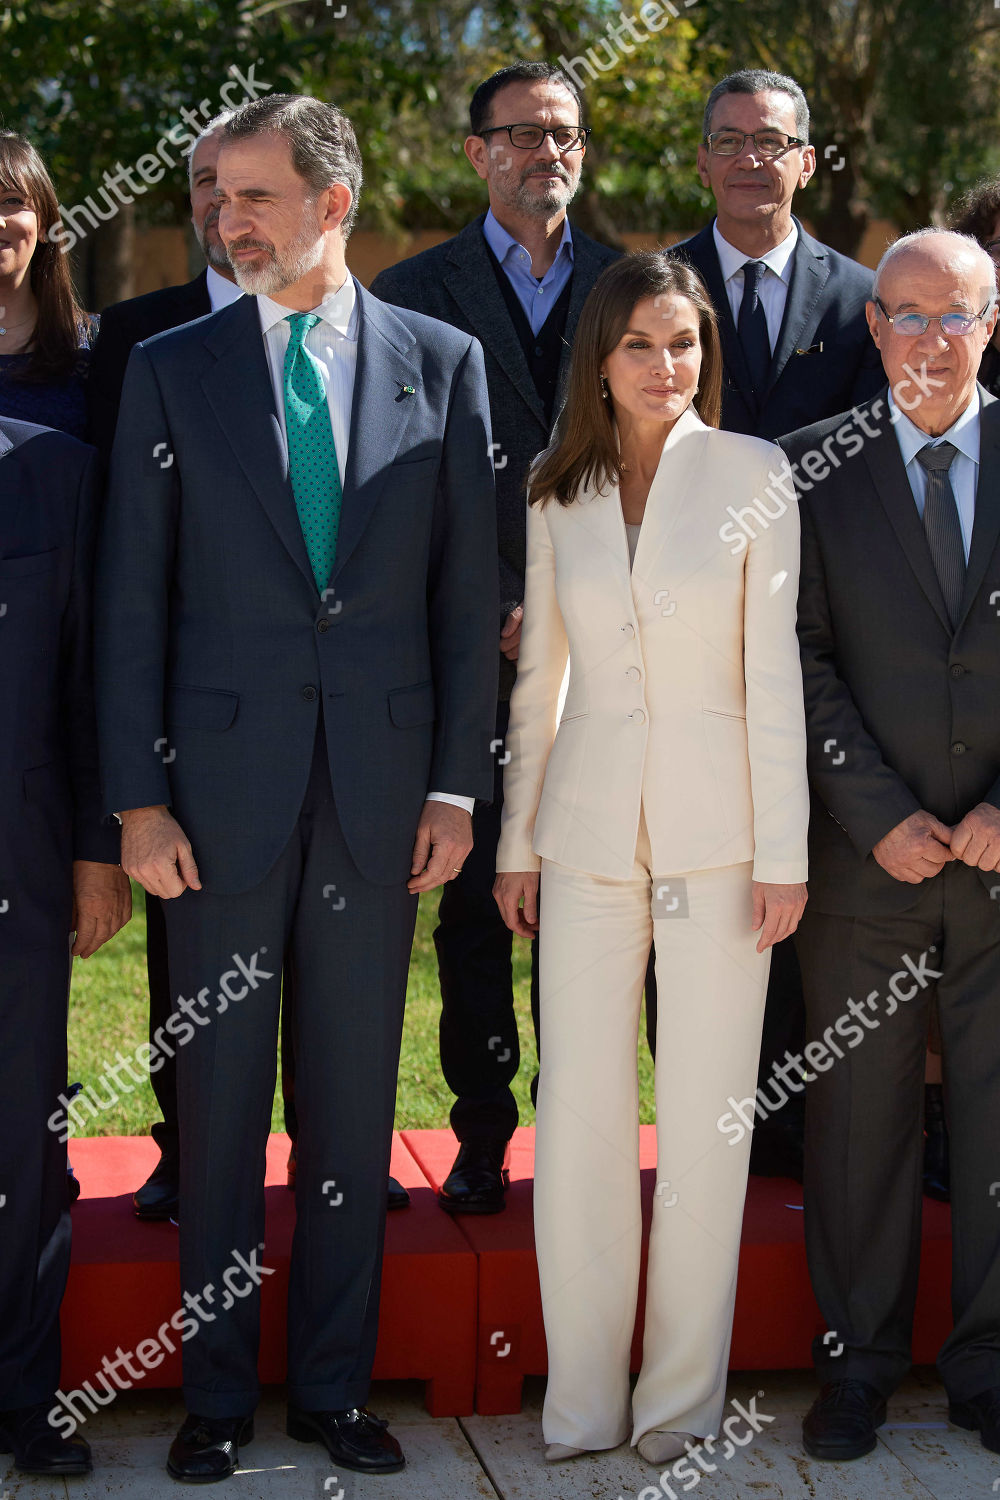 spanish-royals-visit-to-rabat-morocco-shutterstock-editorial-10105309ah.jpg